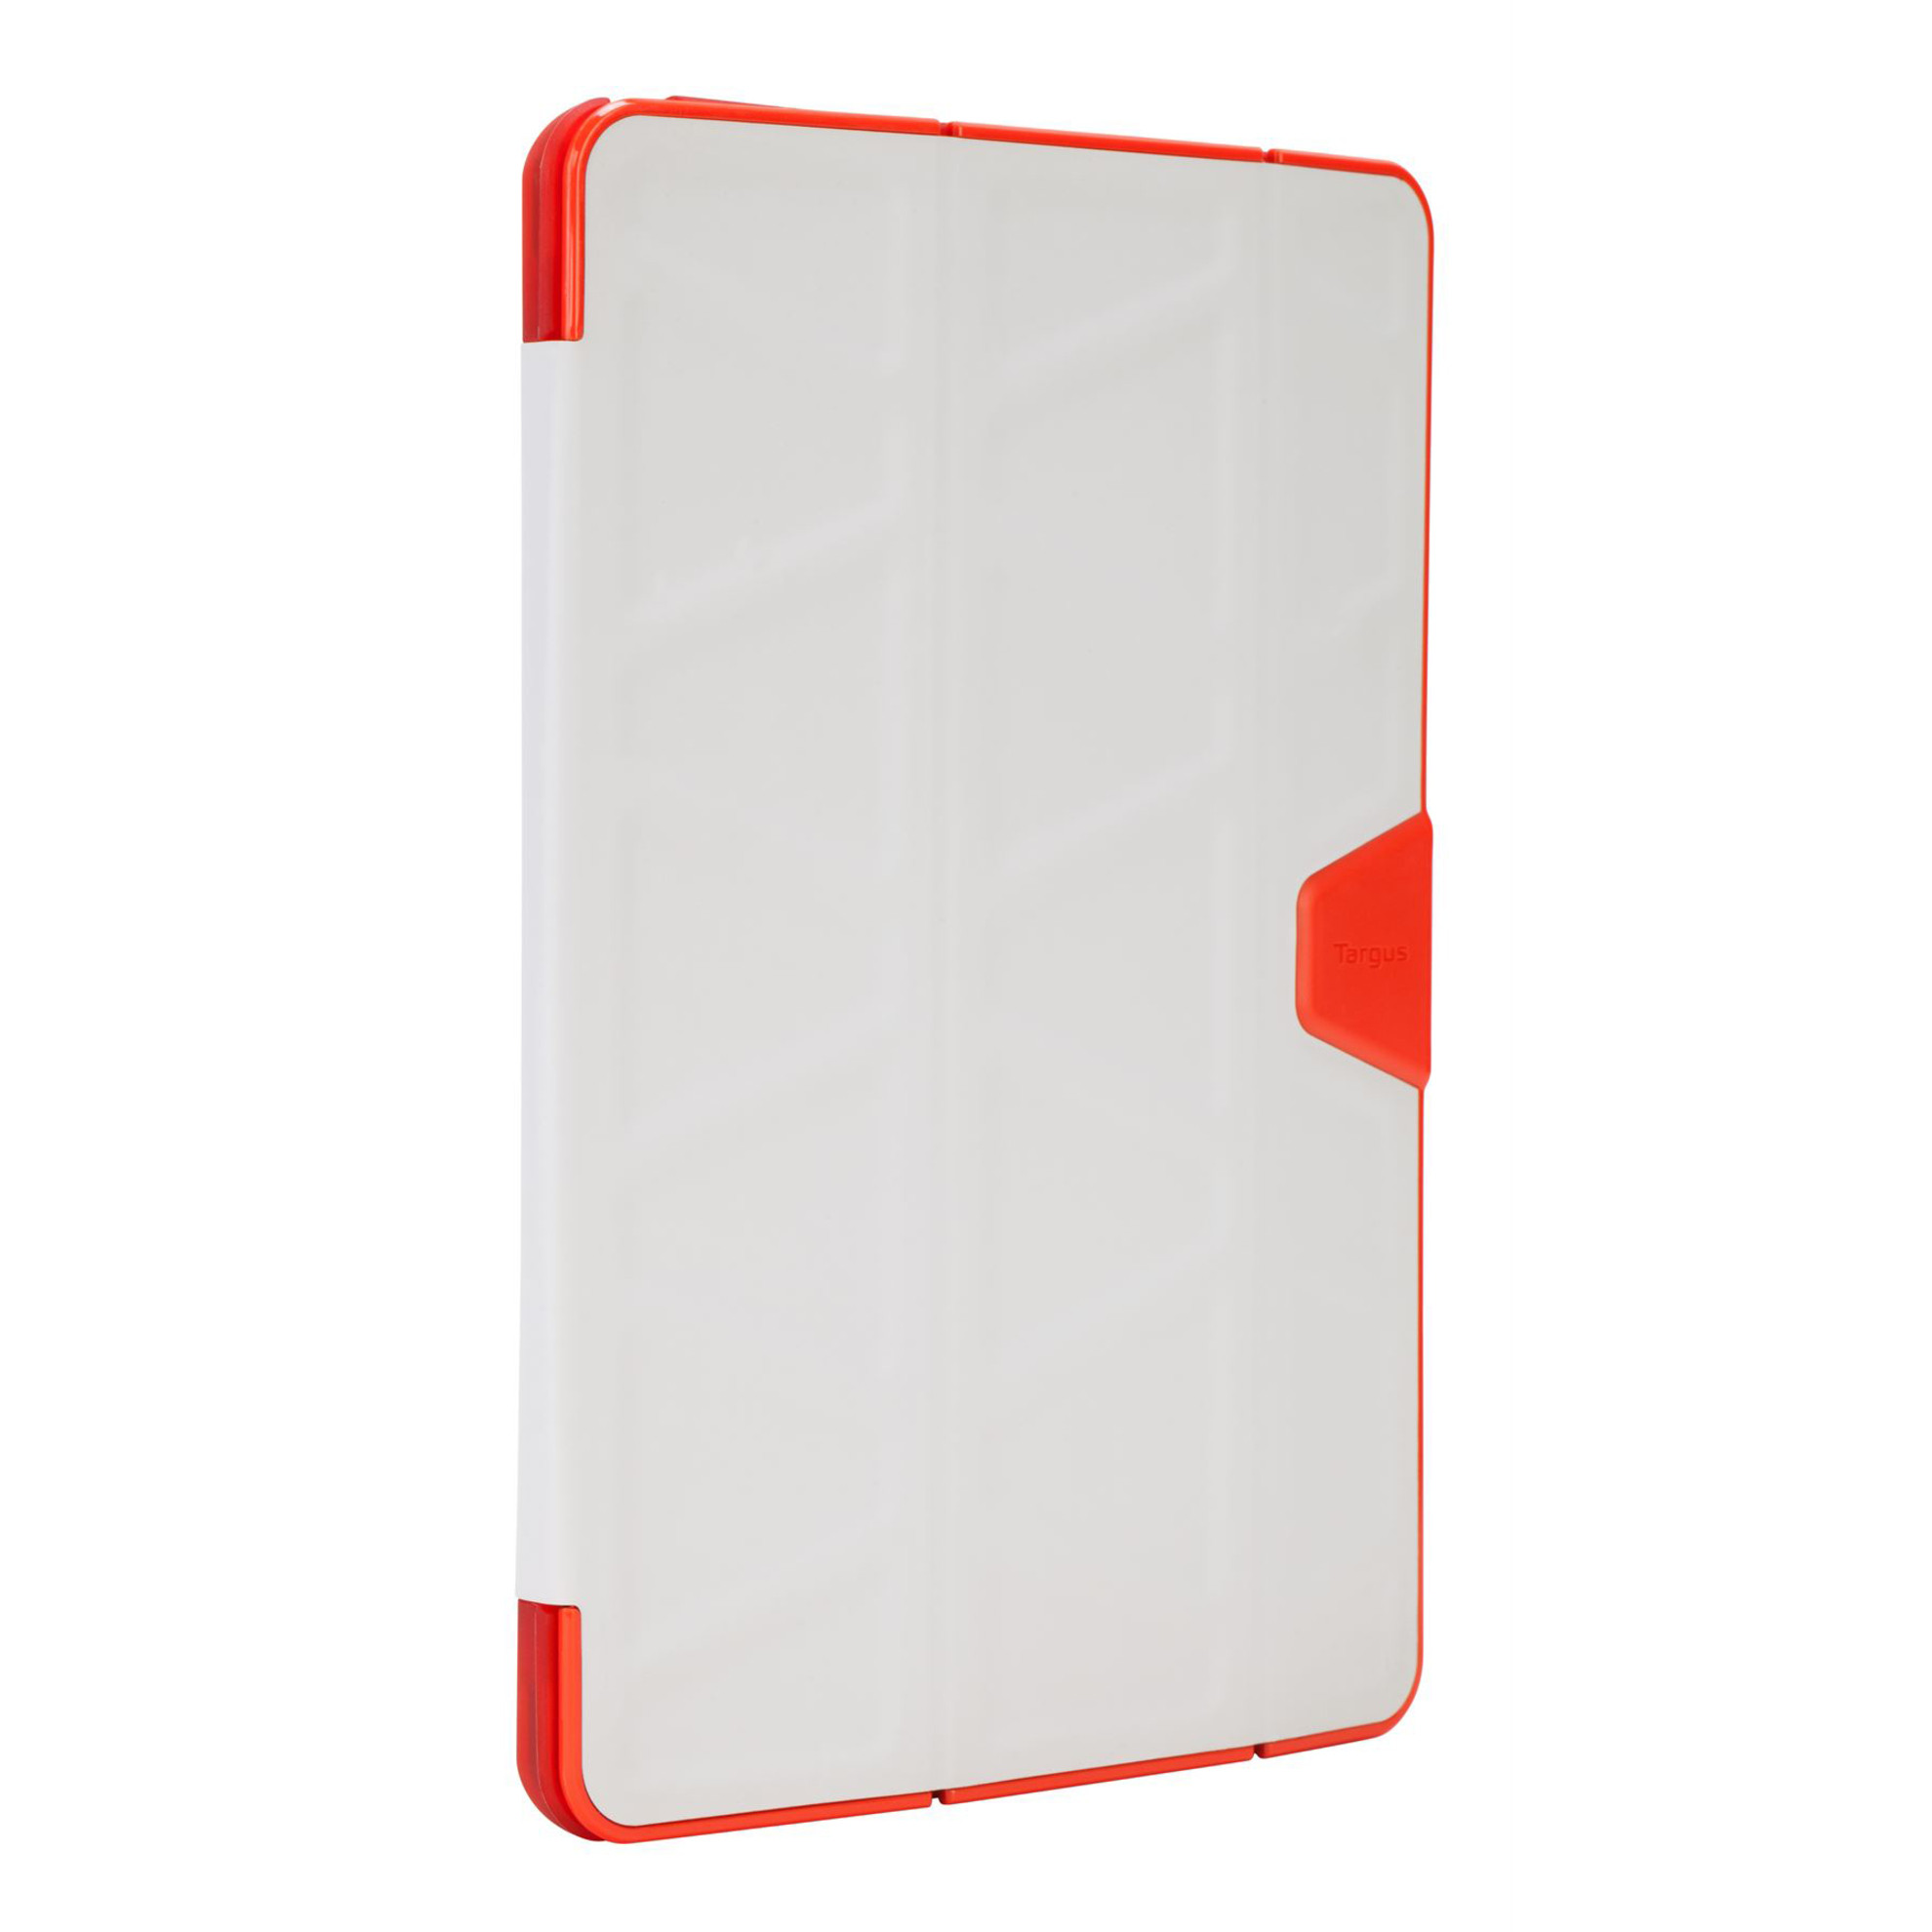 Targus 3D Protection THZ52201US Rugged Carrying Case iPad Air 2 TabletLight Gray, RedBump Resistant Interior, Drop Resistant Interior,… THZ52201US